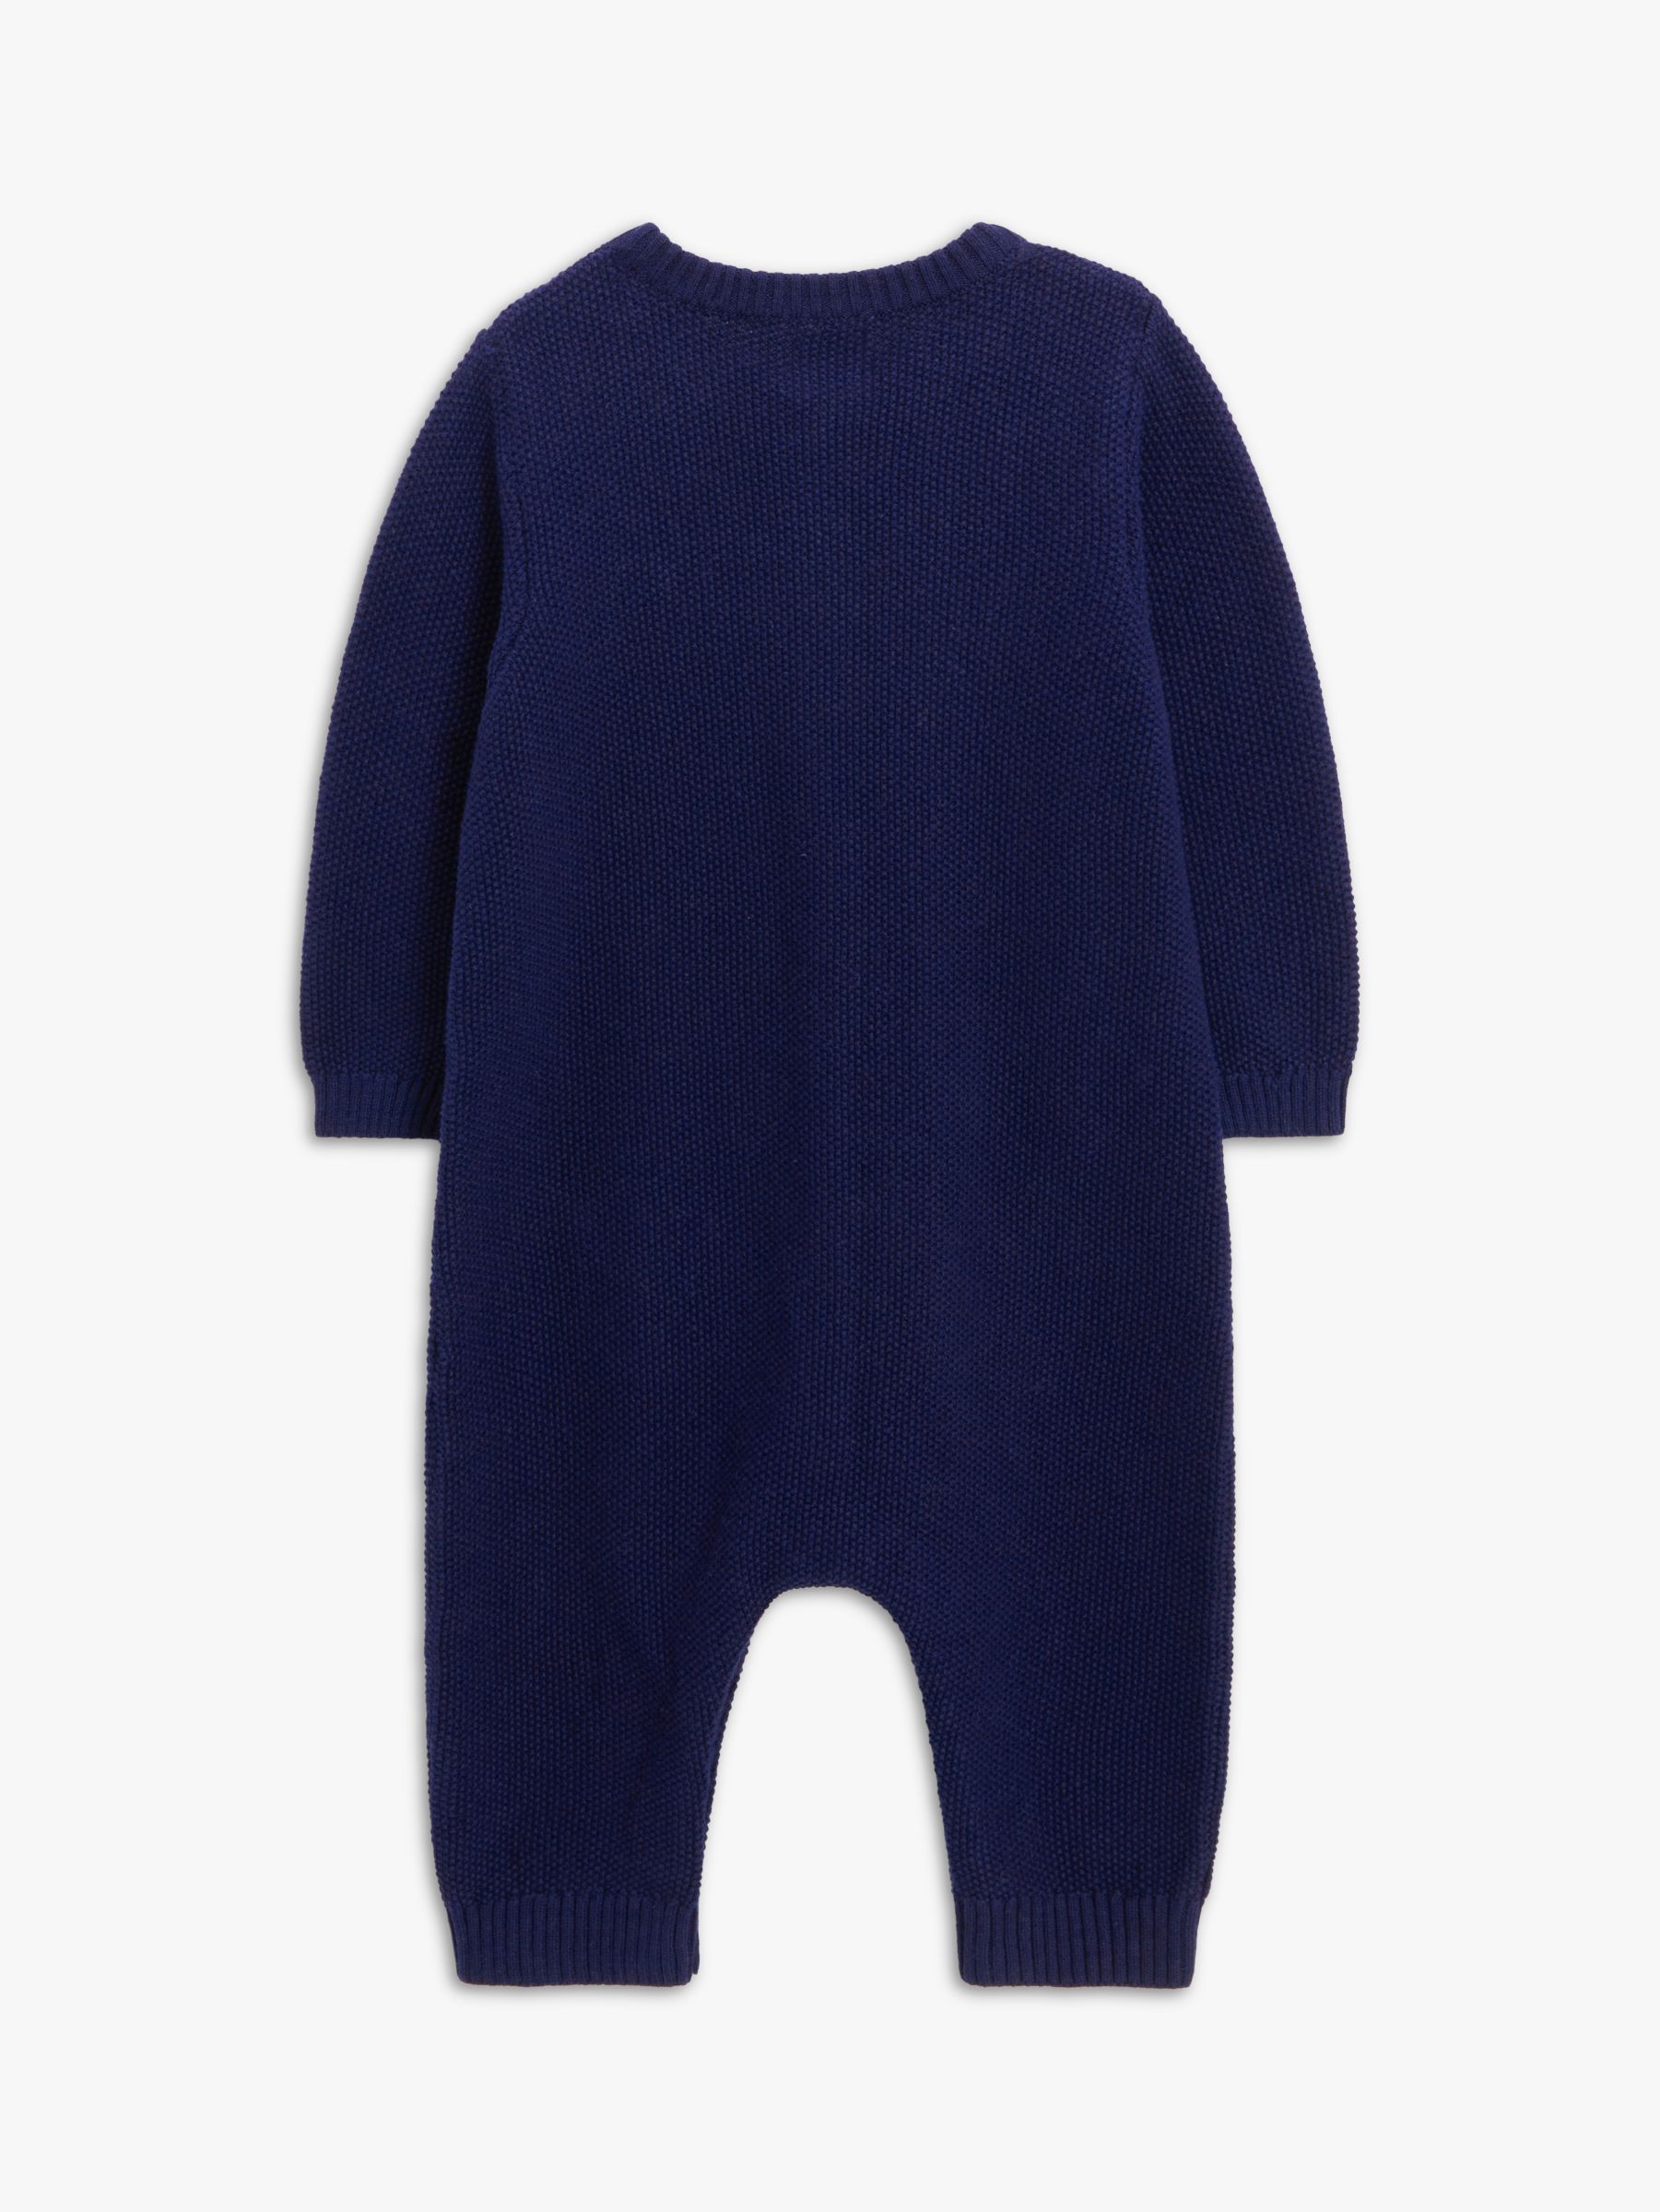 Buy John Lewis Baby Knit Cotton Romper Online at johnlewis.com